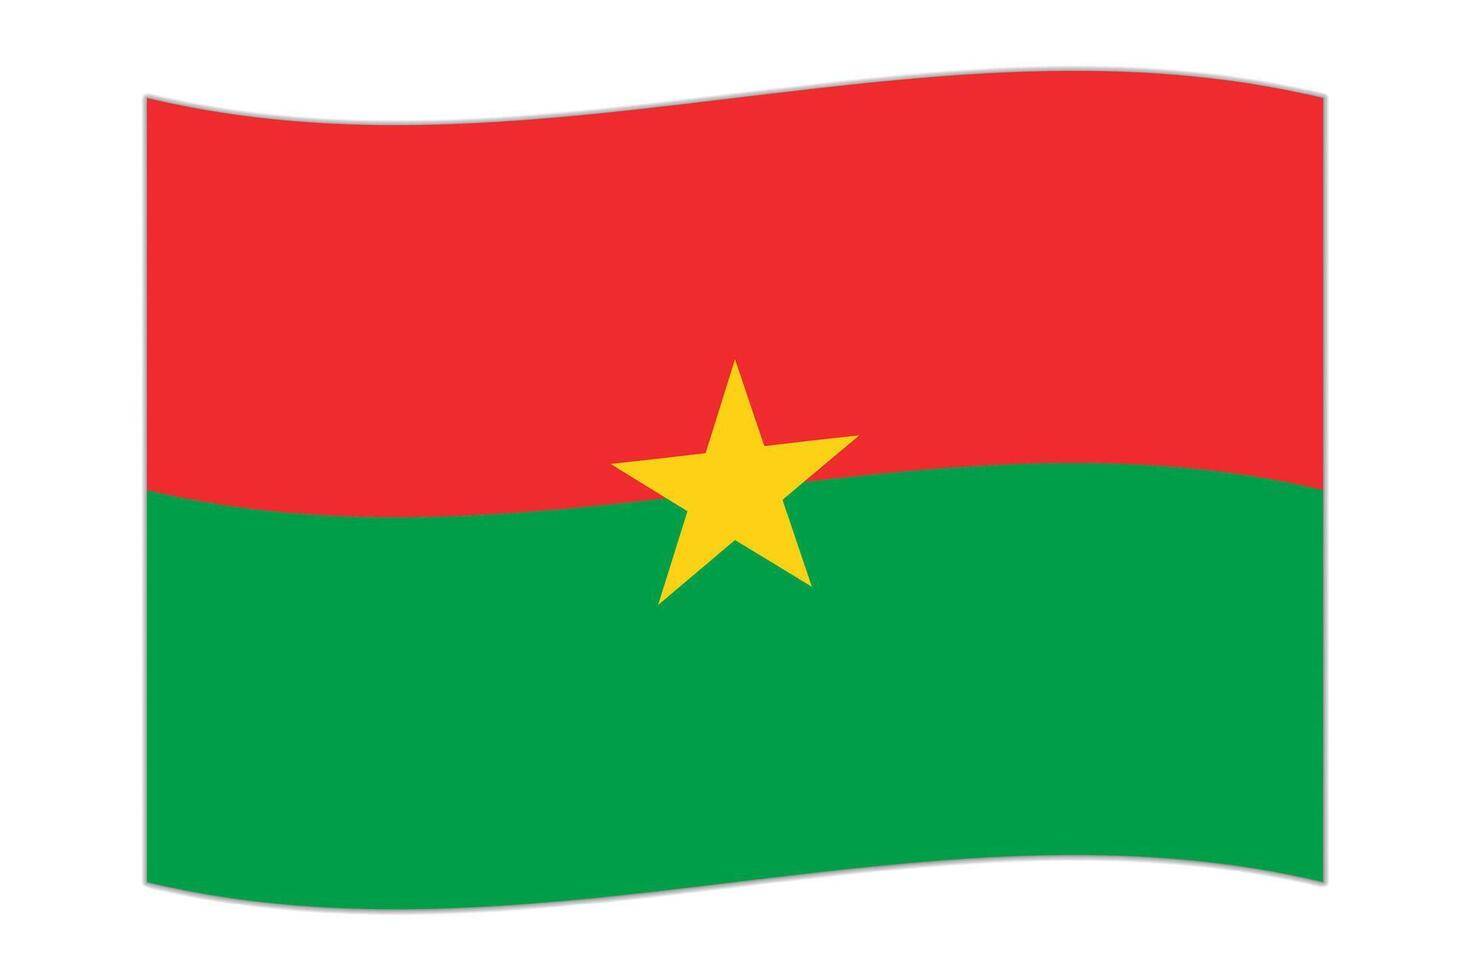 Waving flag of the country Burkina Faso. Vector illustration.